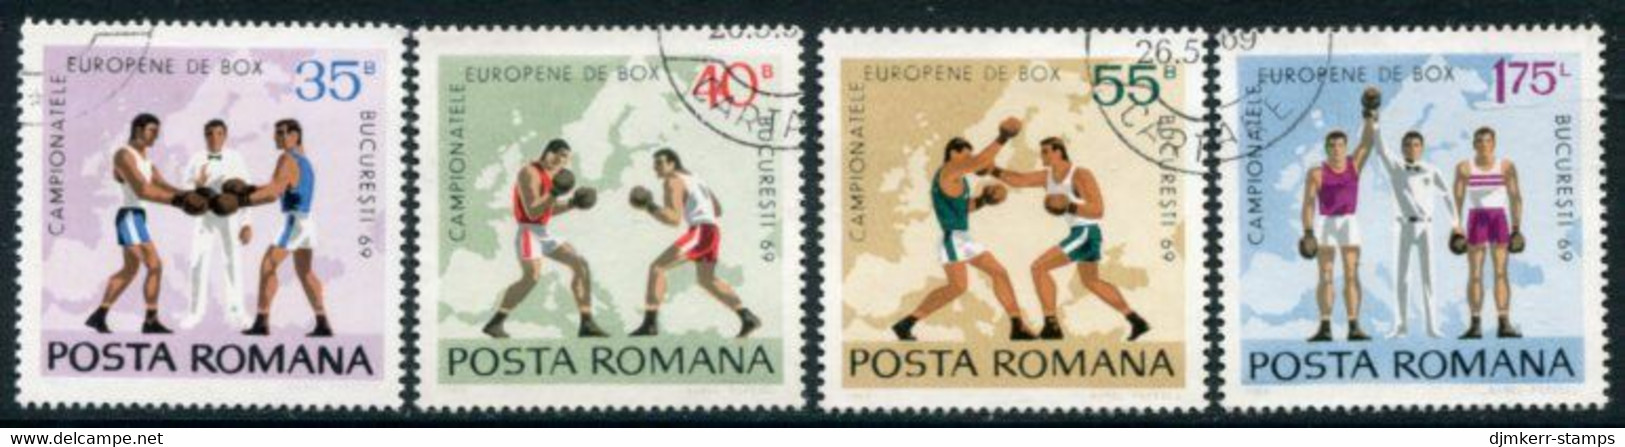 ROMANIA 1969 European Boxing Championship Used  Michel 2767-70 - Oblitérés